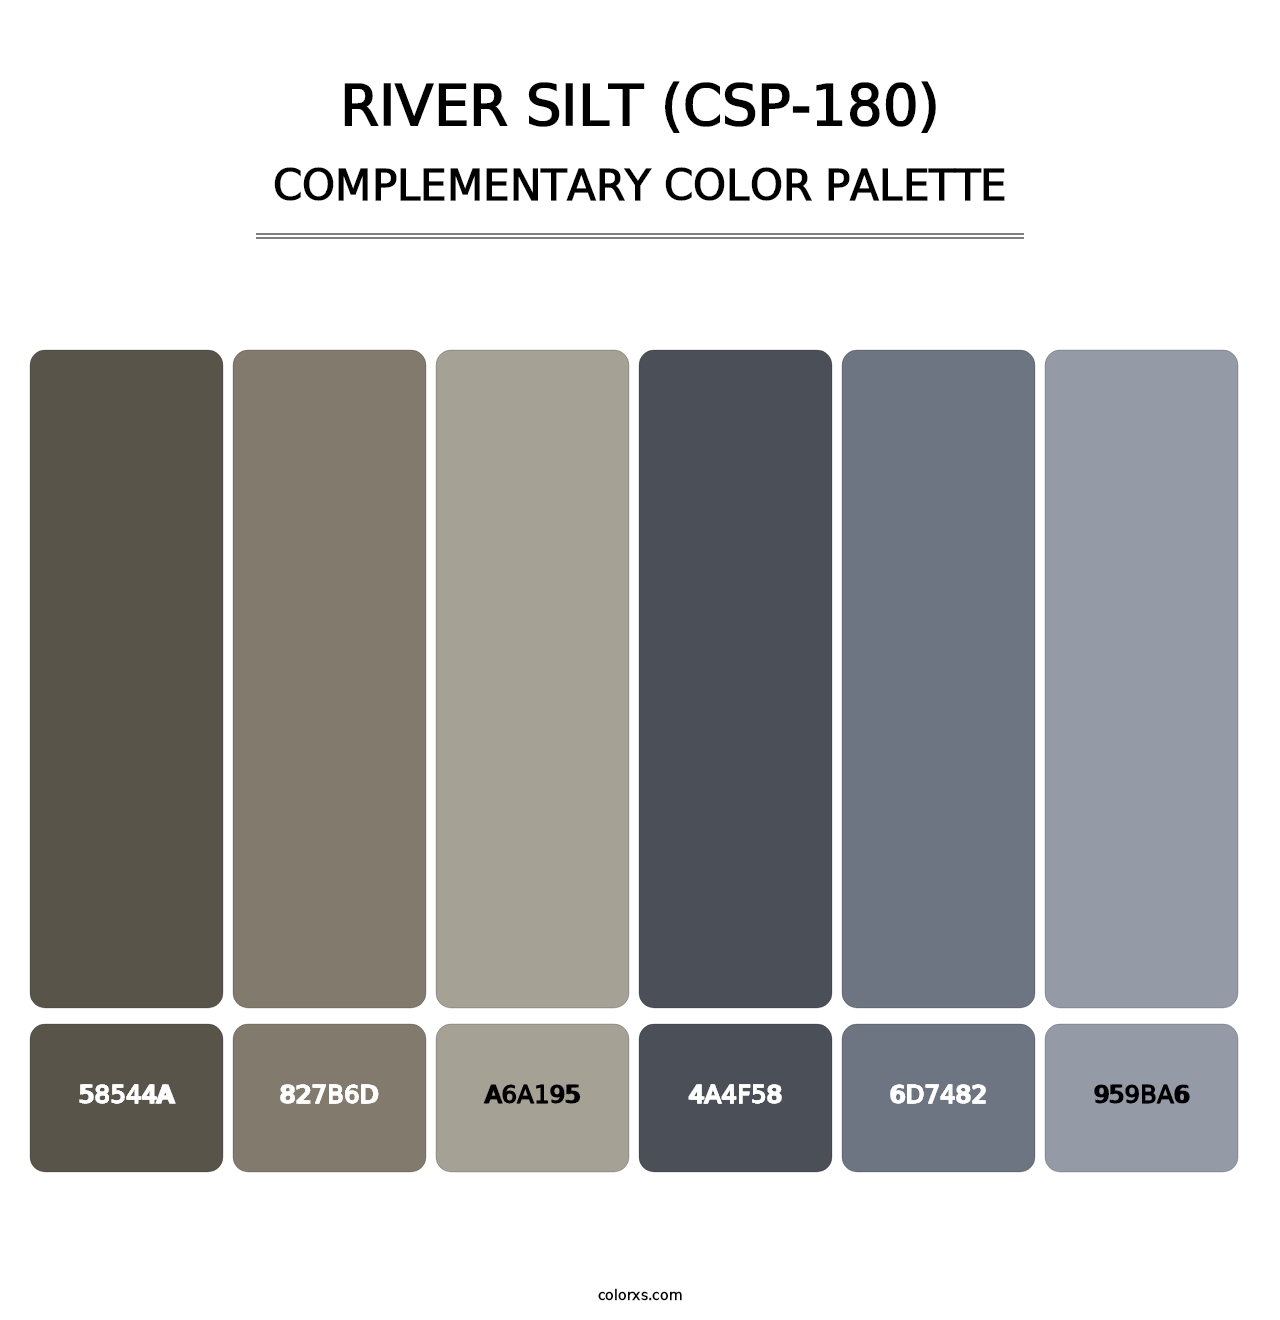 River Silt (CSP-180) - Complementary Color Palette